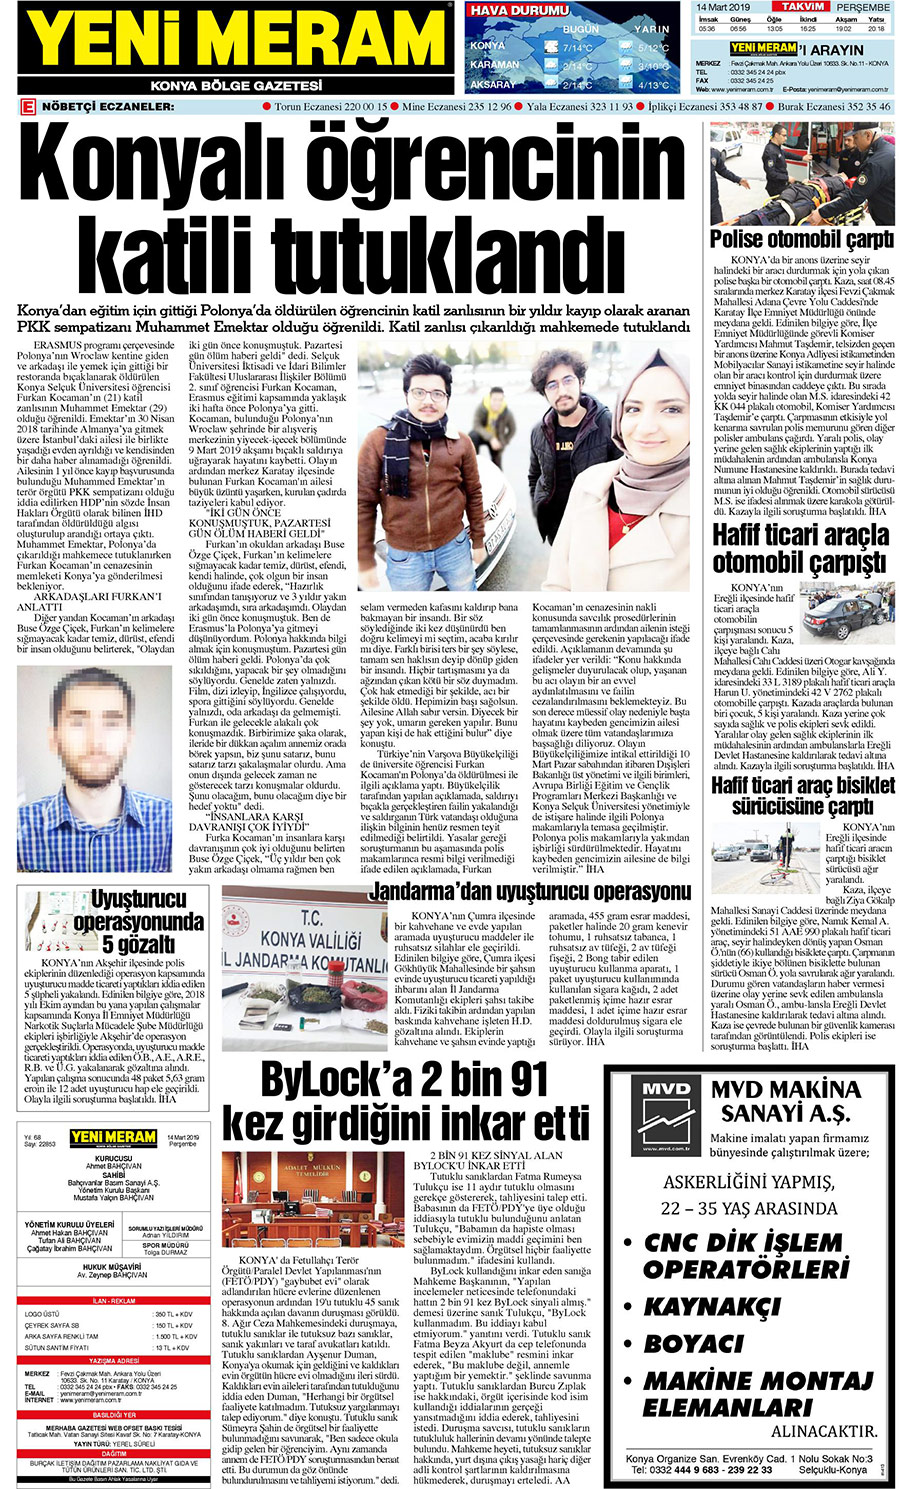 14 Mart 2019 Yeni Meram Gazetesi